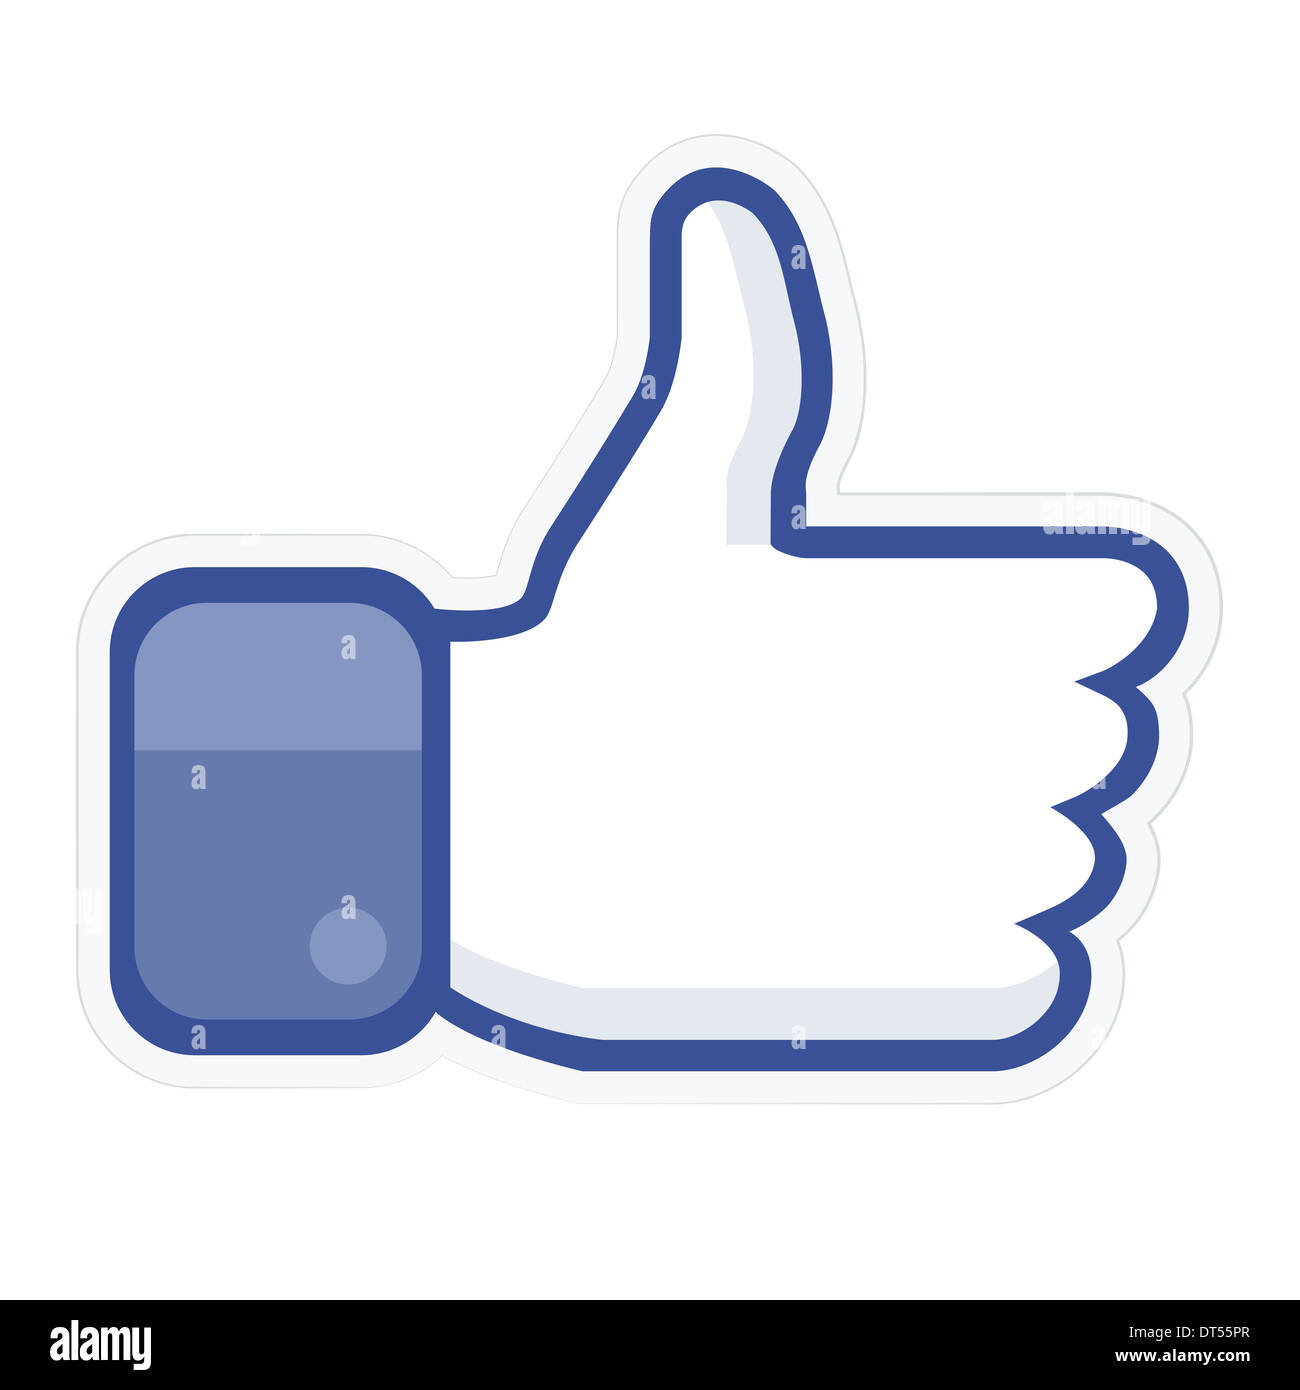 Thumb up symbol Stock Photo - Alamy